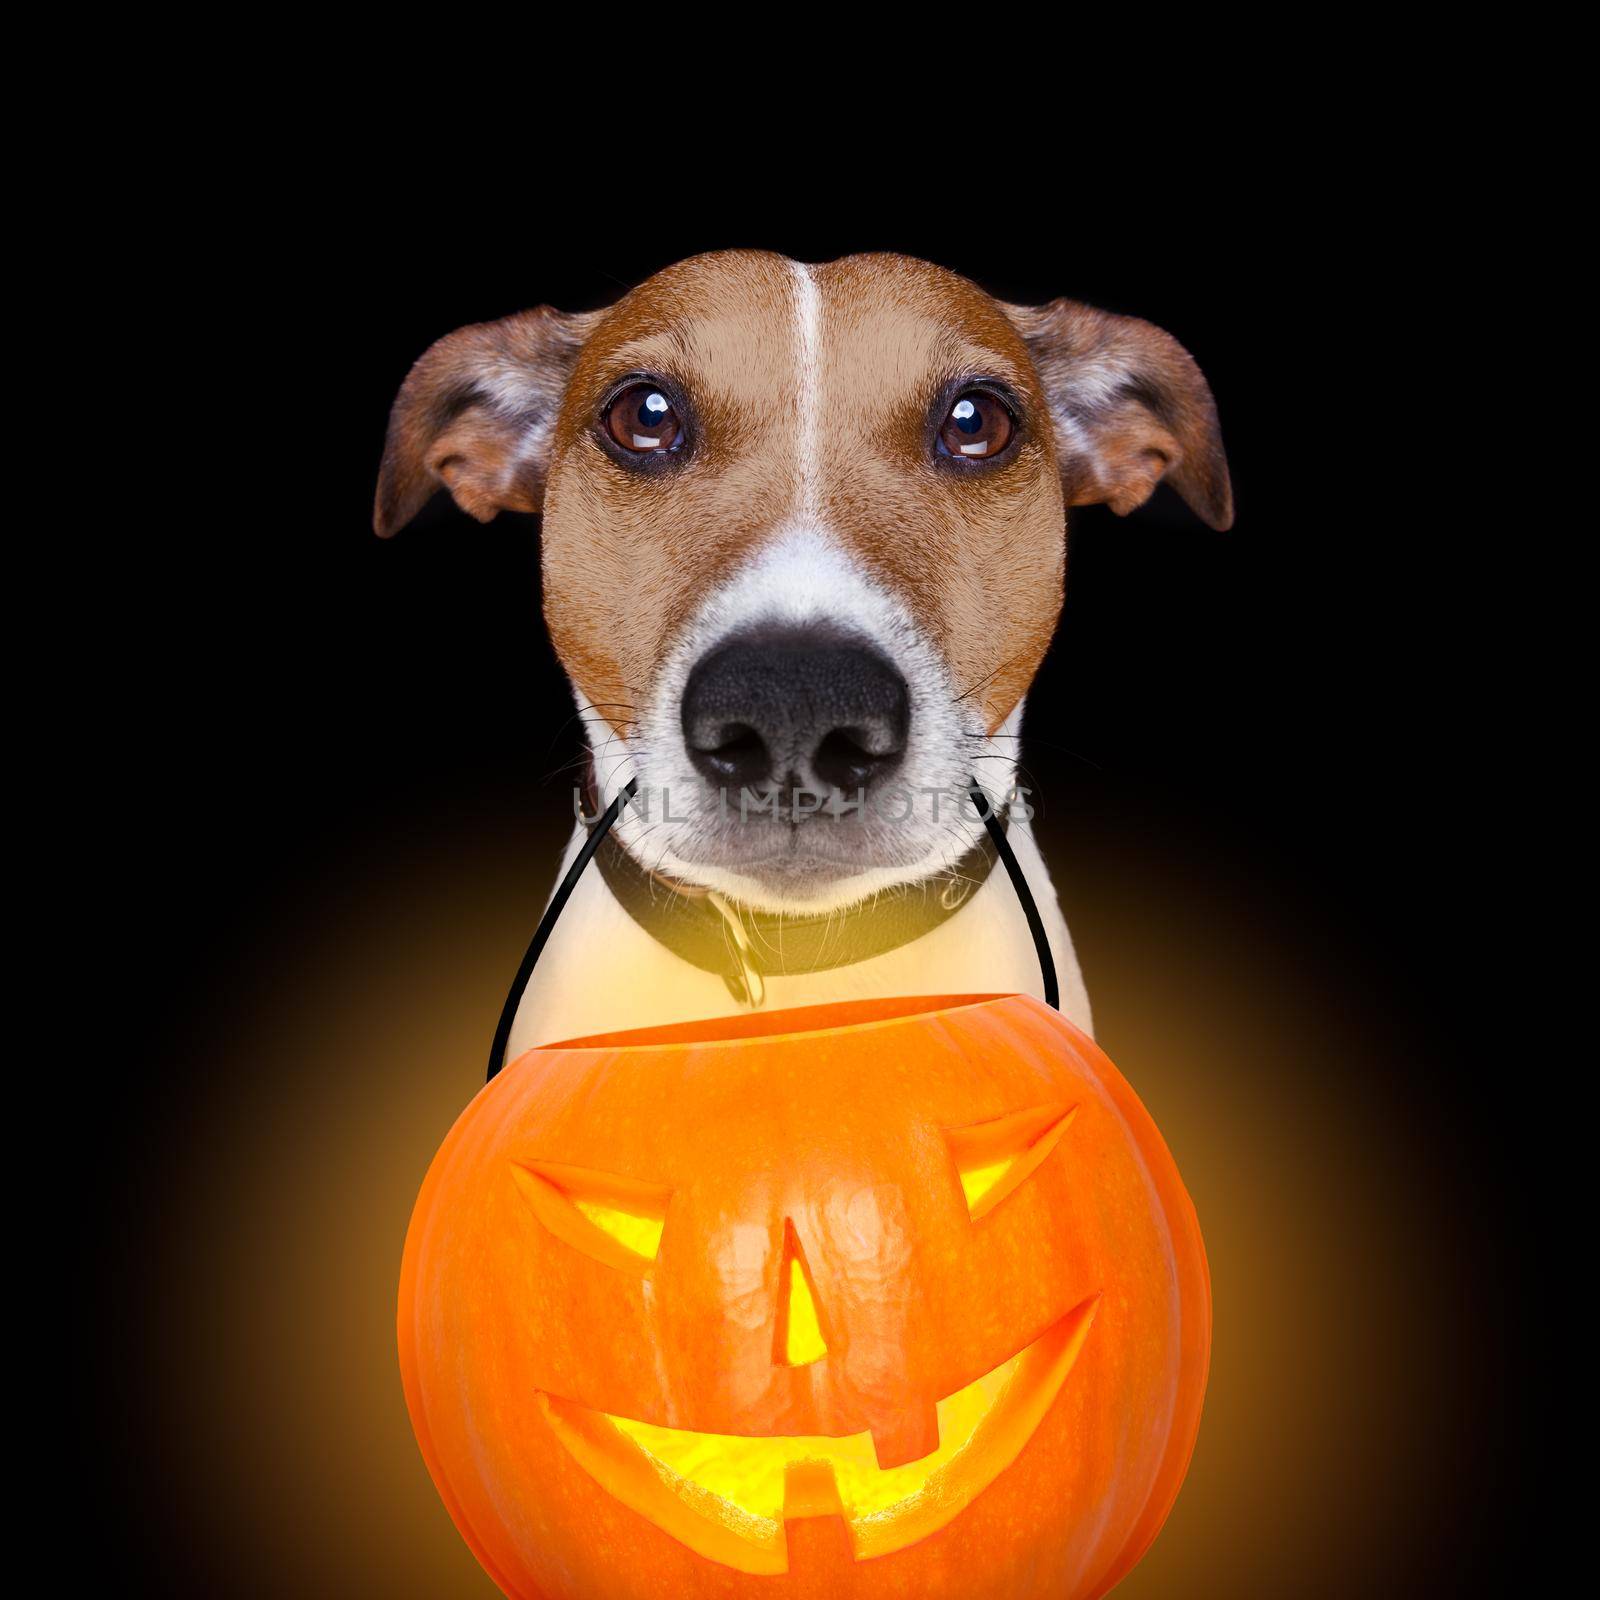 halloween pumpkin dog isolated on black by Brosch